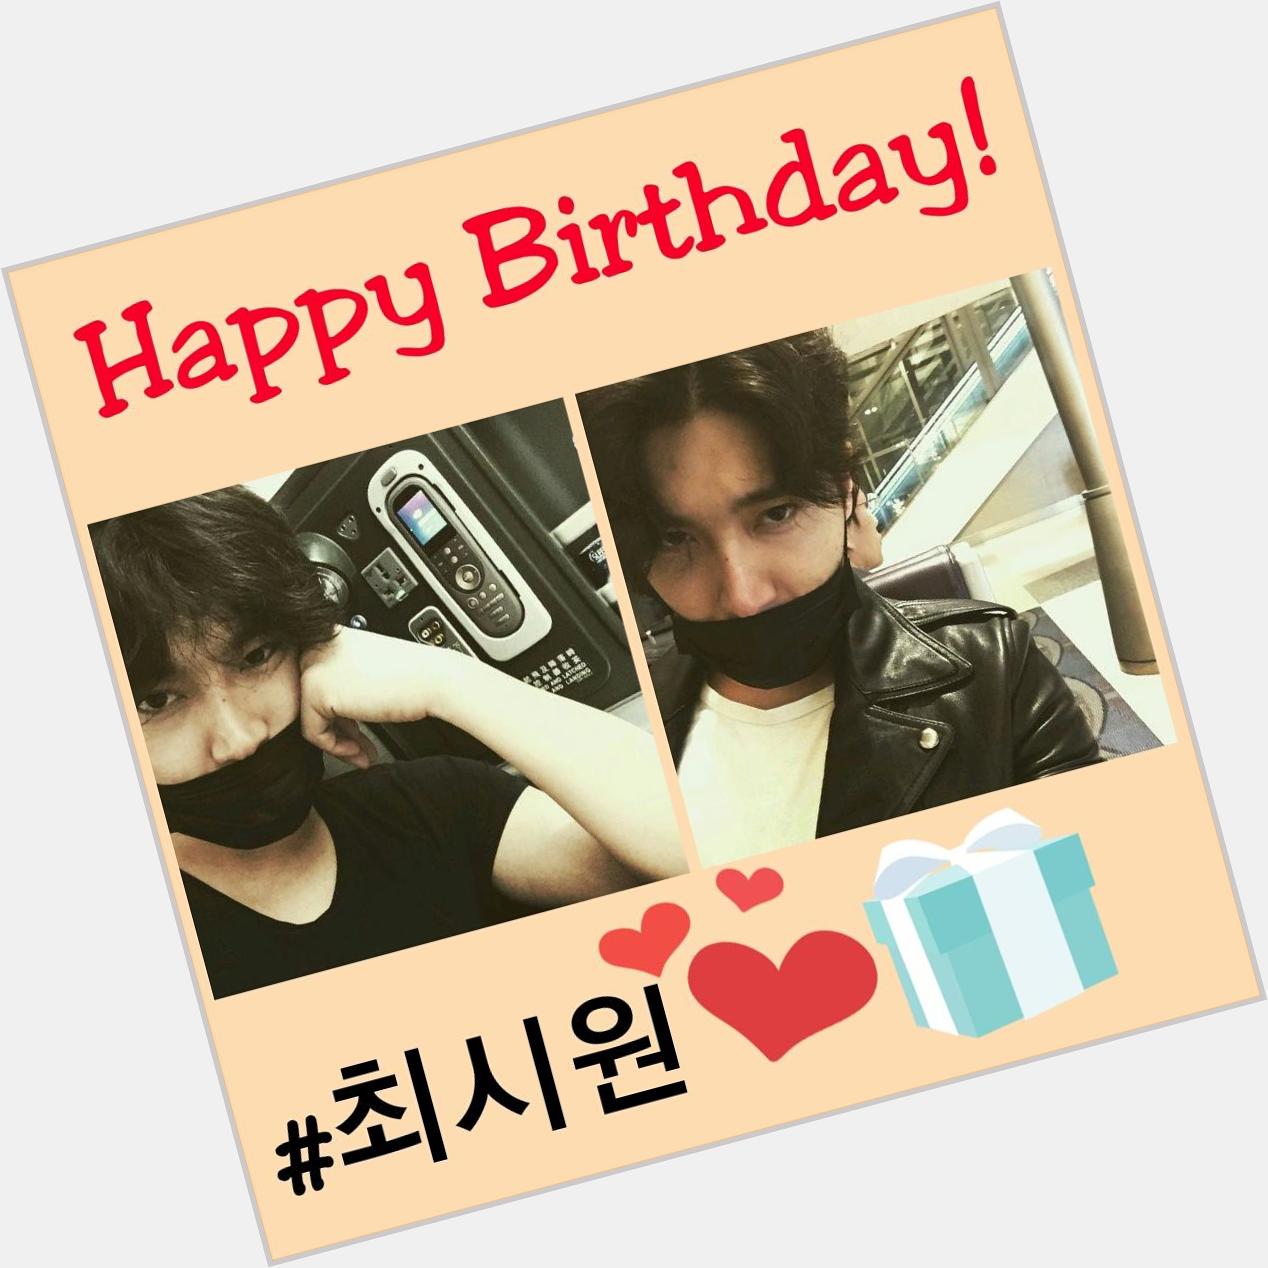  Happy birthday oppa Choi Siwon! I love you~ more birthdays to come. Godbless. Kkkk.        